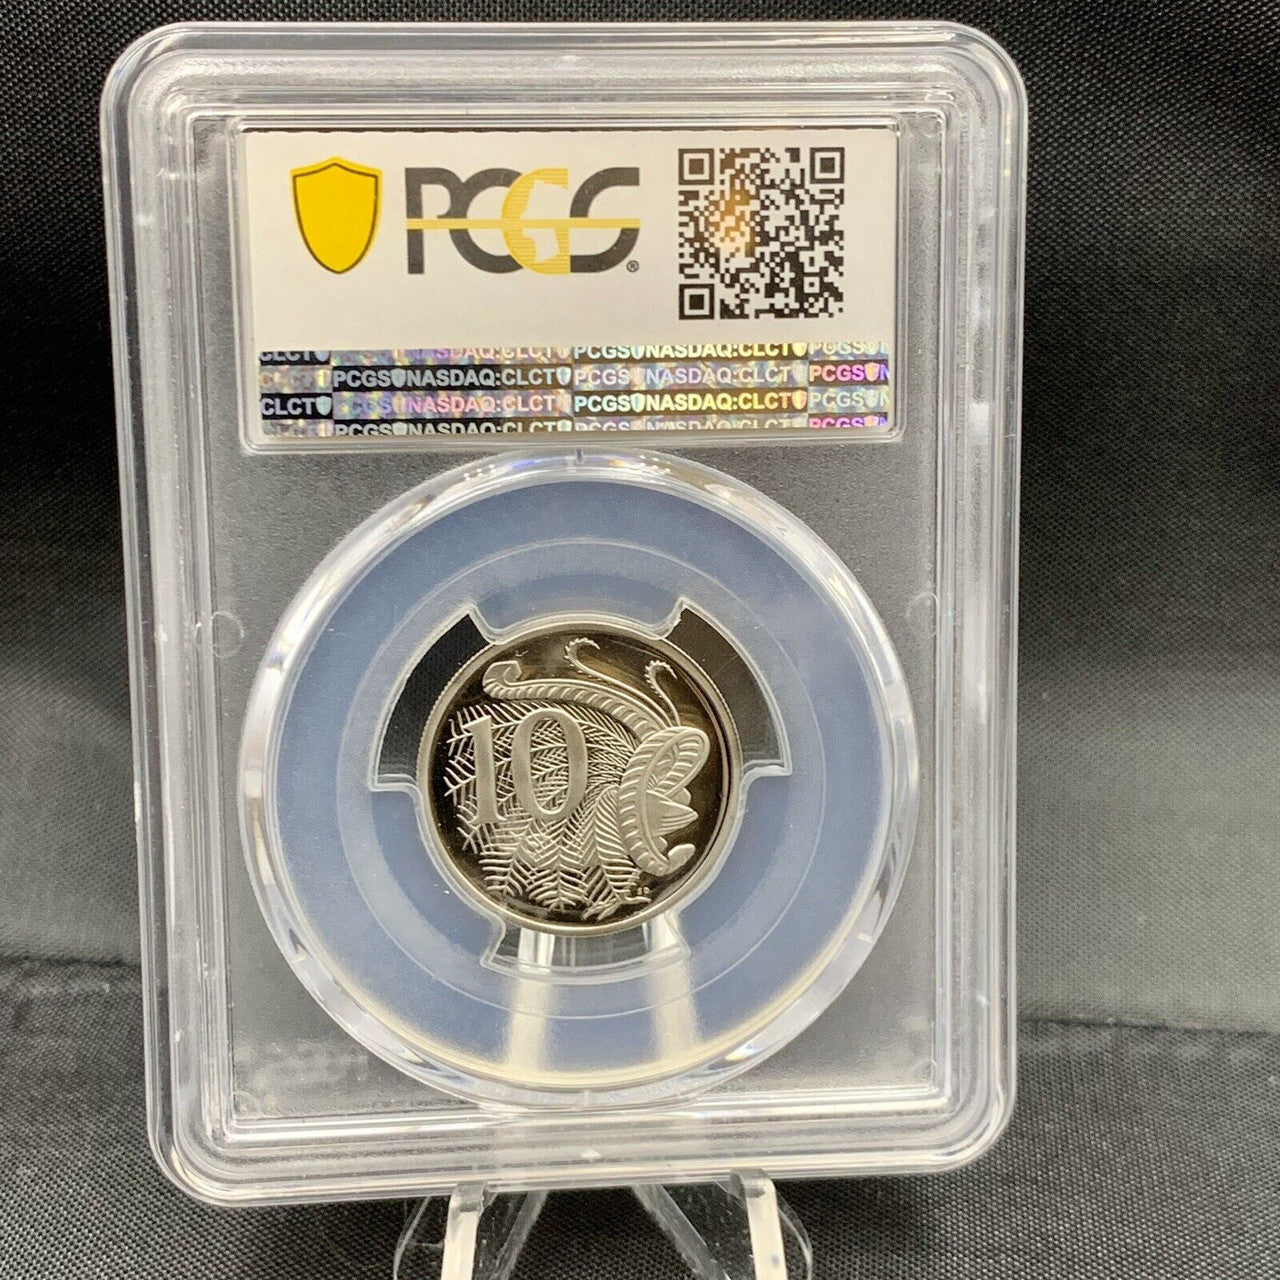 2013 Australian 10c PCGS PR69DCAM Proof Coin